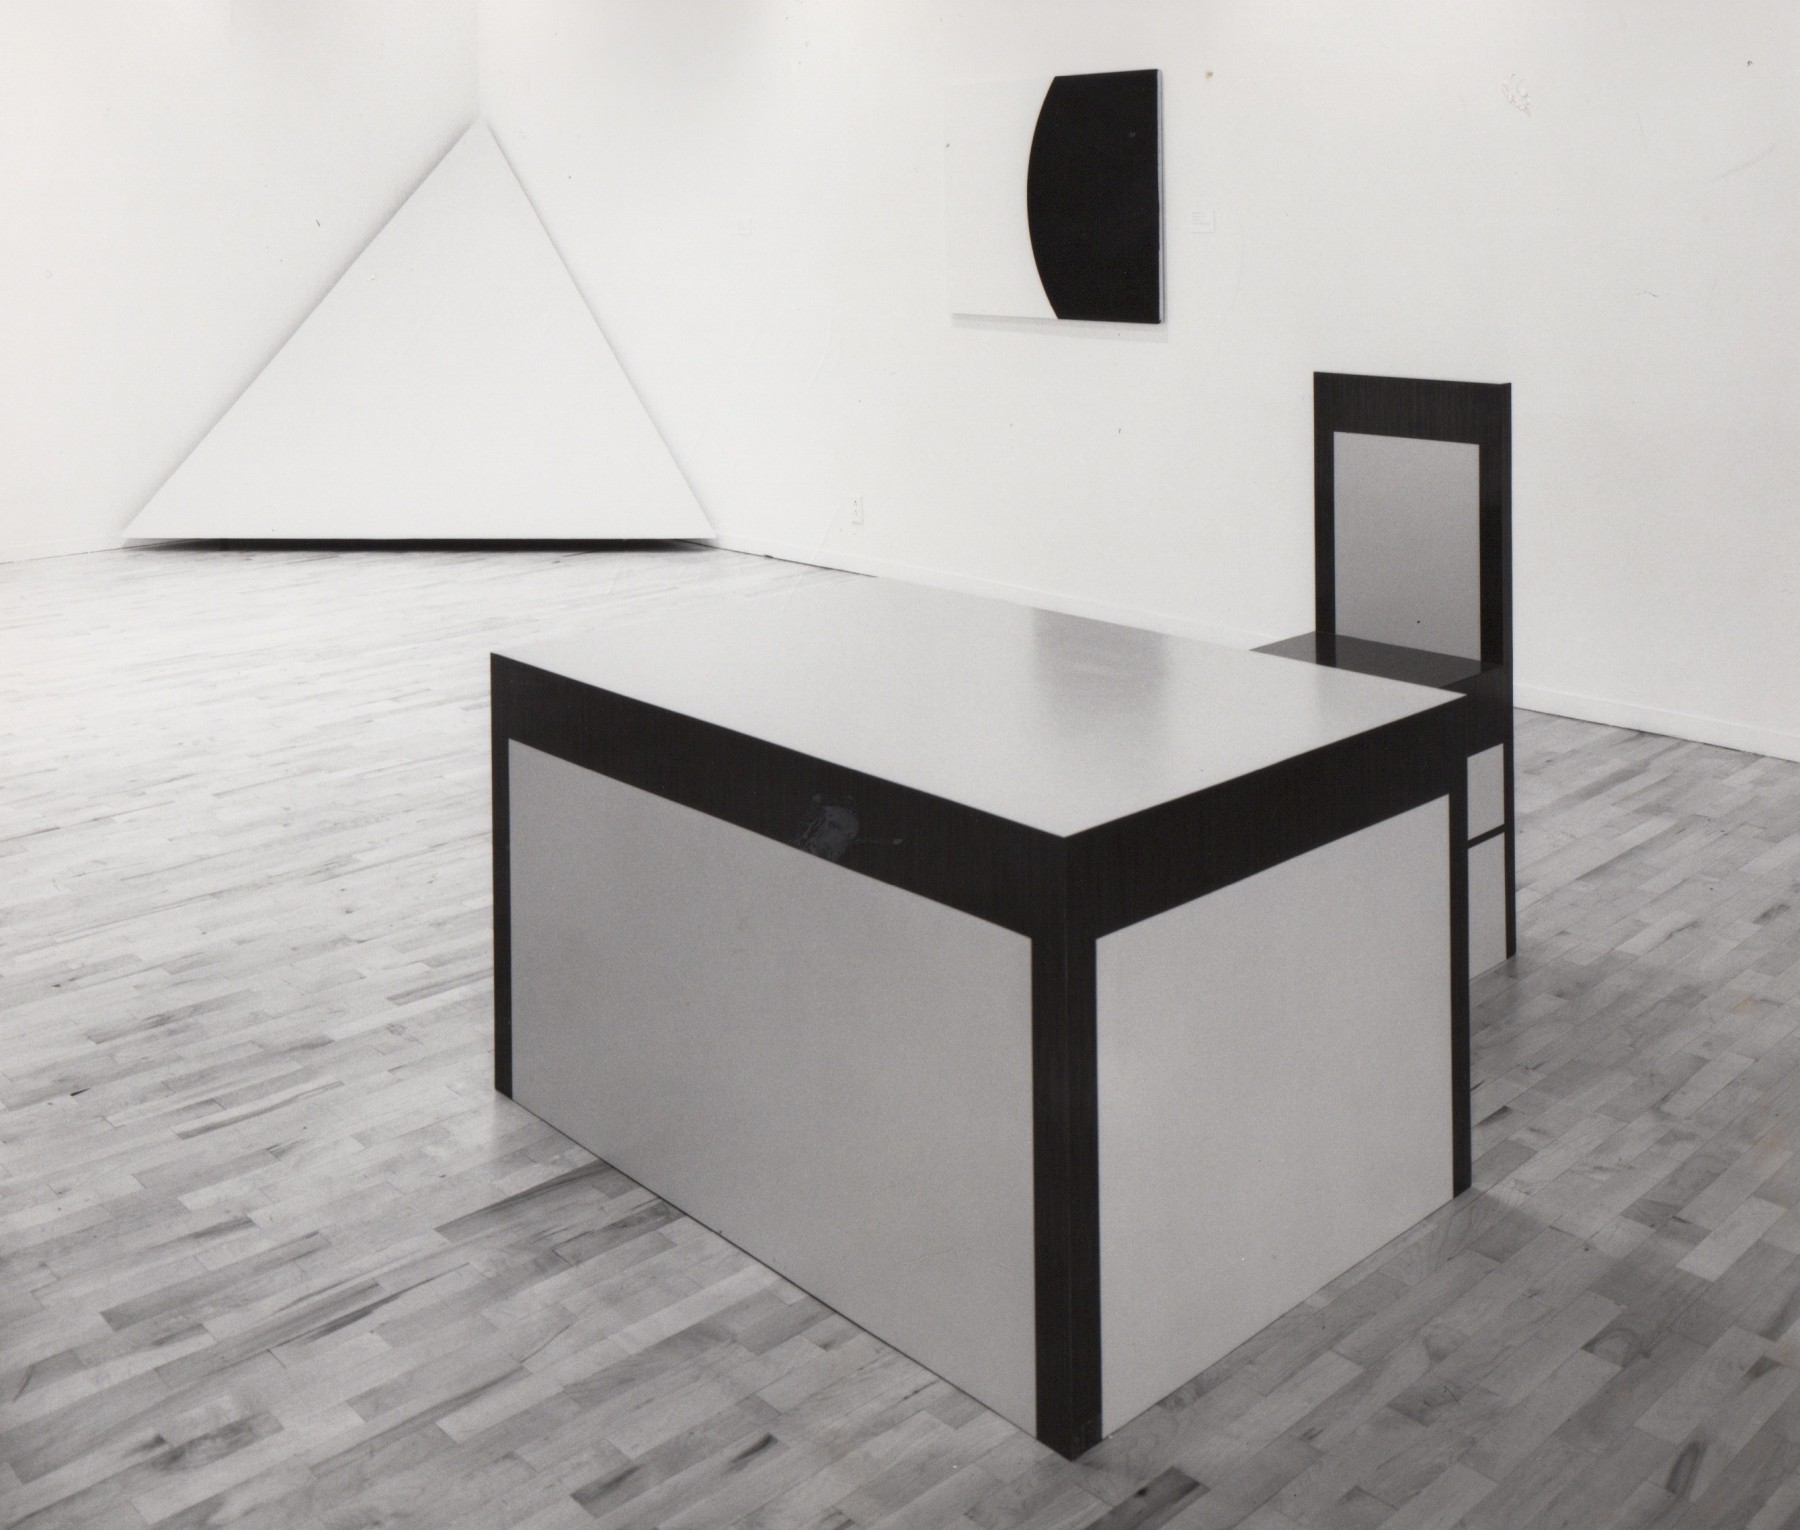 Installation view, 25th Anniversary Exhibition of Leo Castelli, 142 GREENE